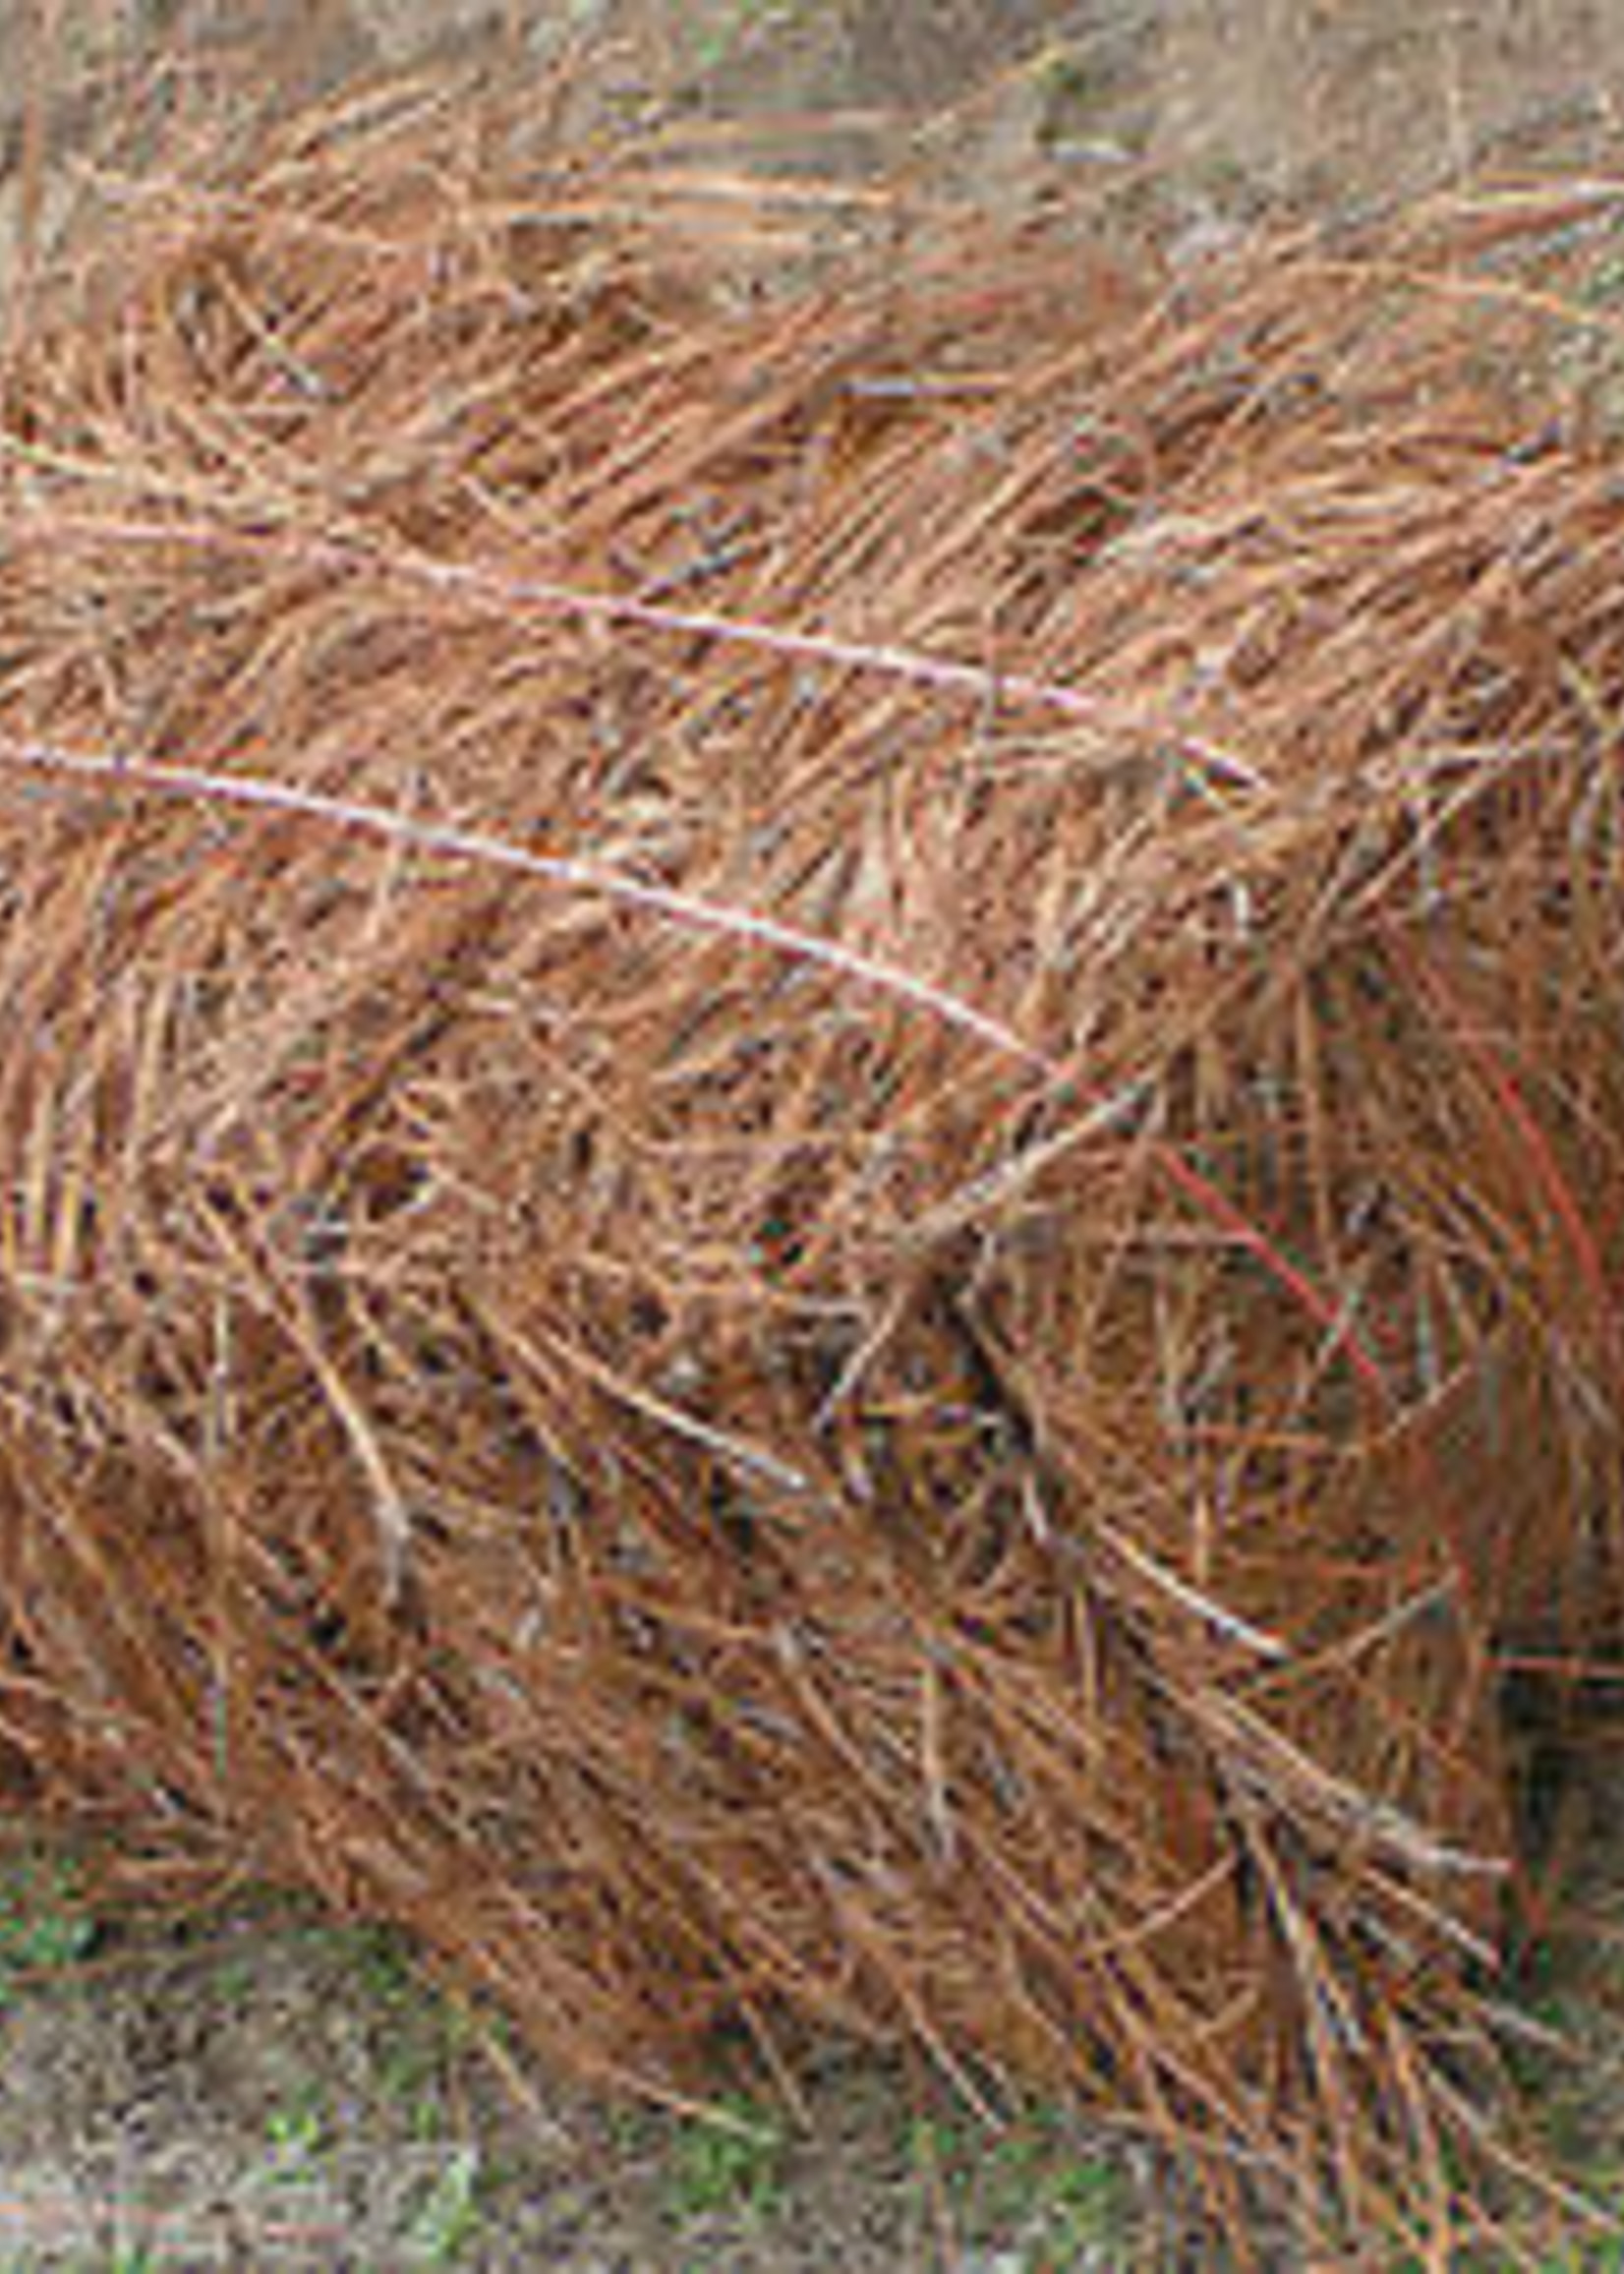 Square Long Needle Pine Straw Bales